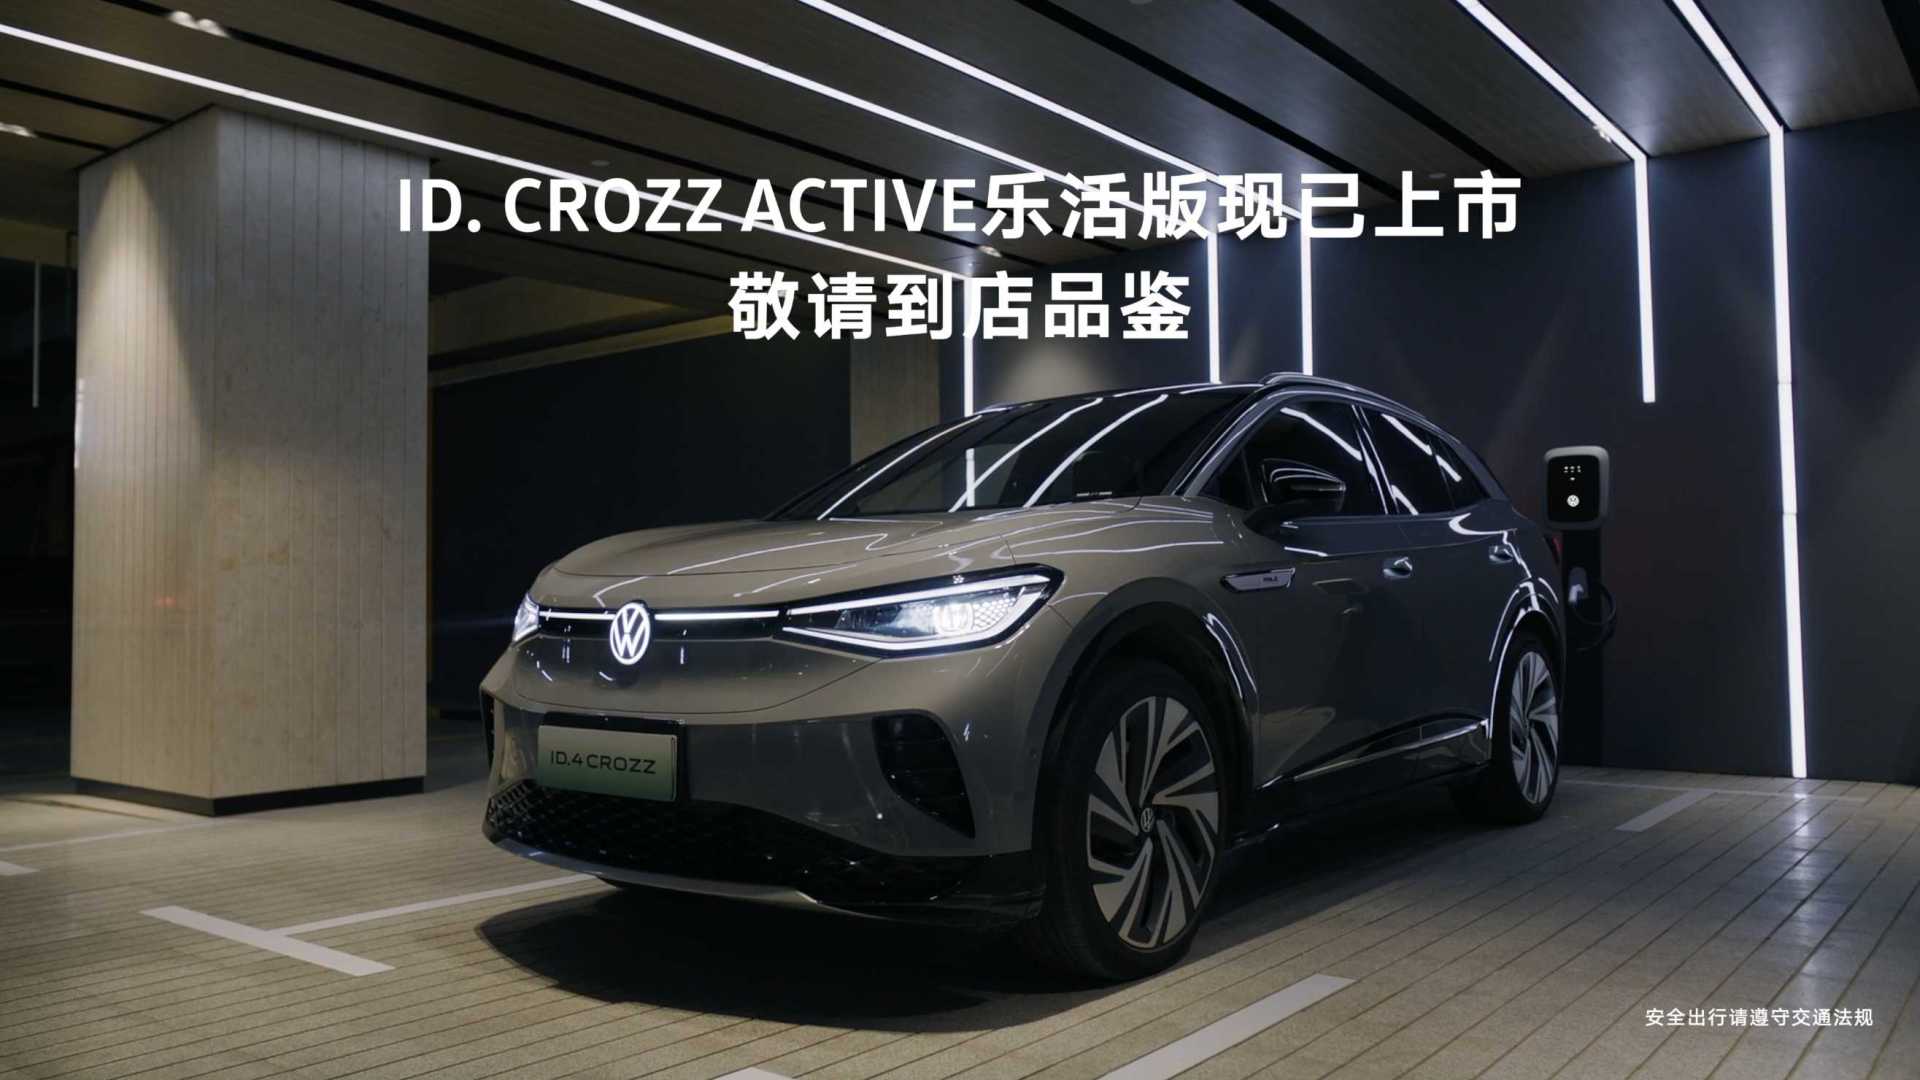 VW ID4CrozzTVC 30S 中文字幕